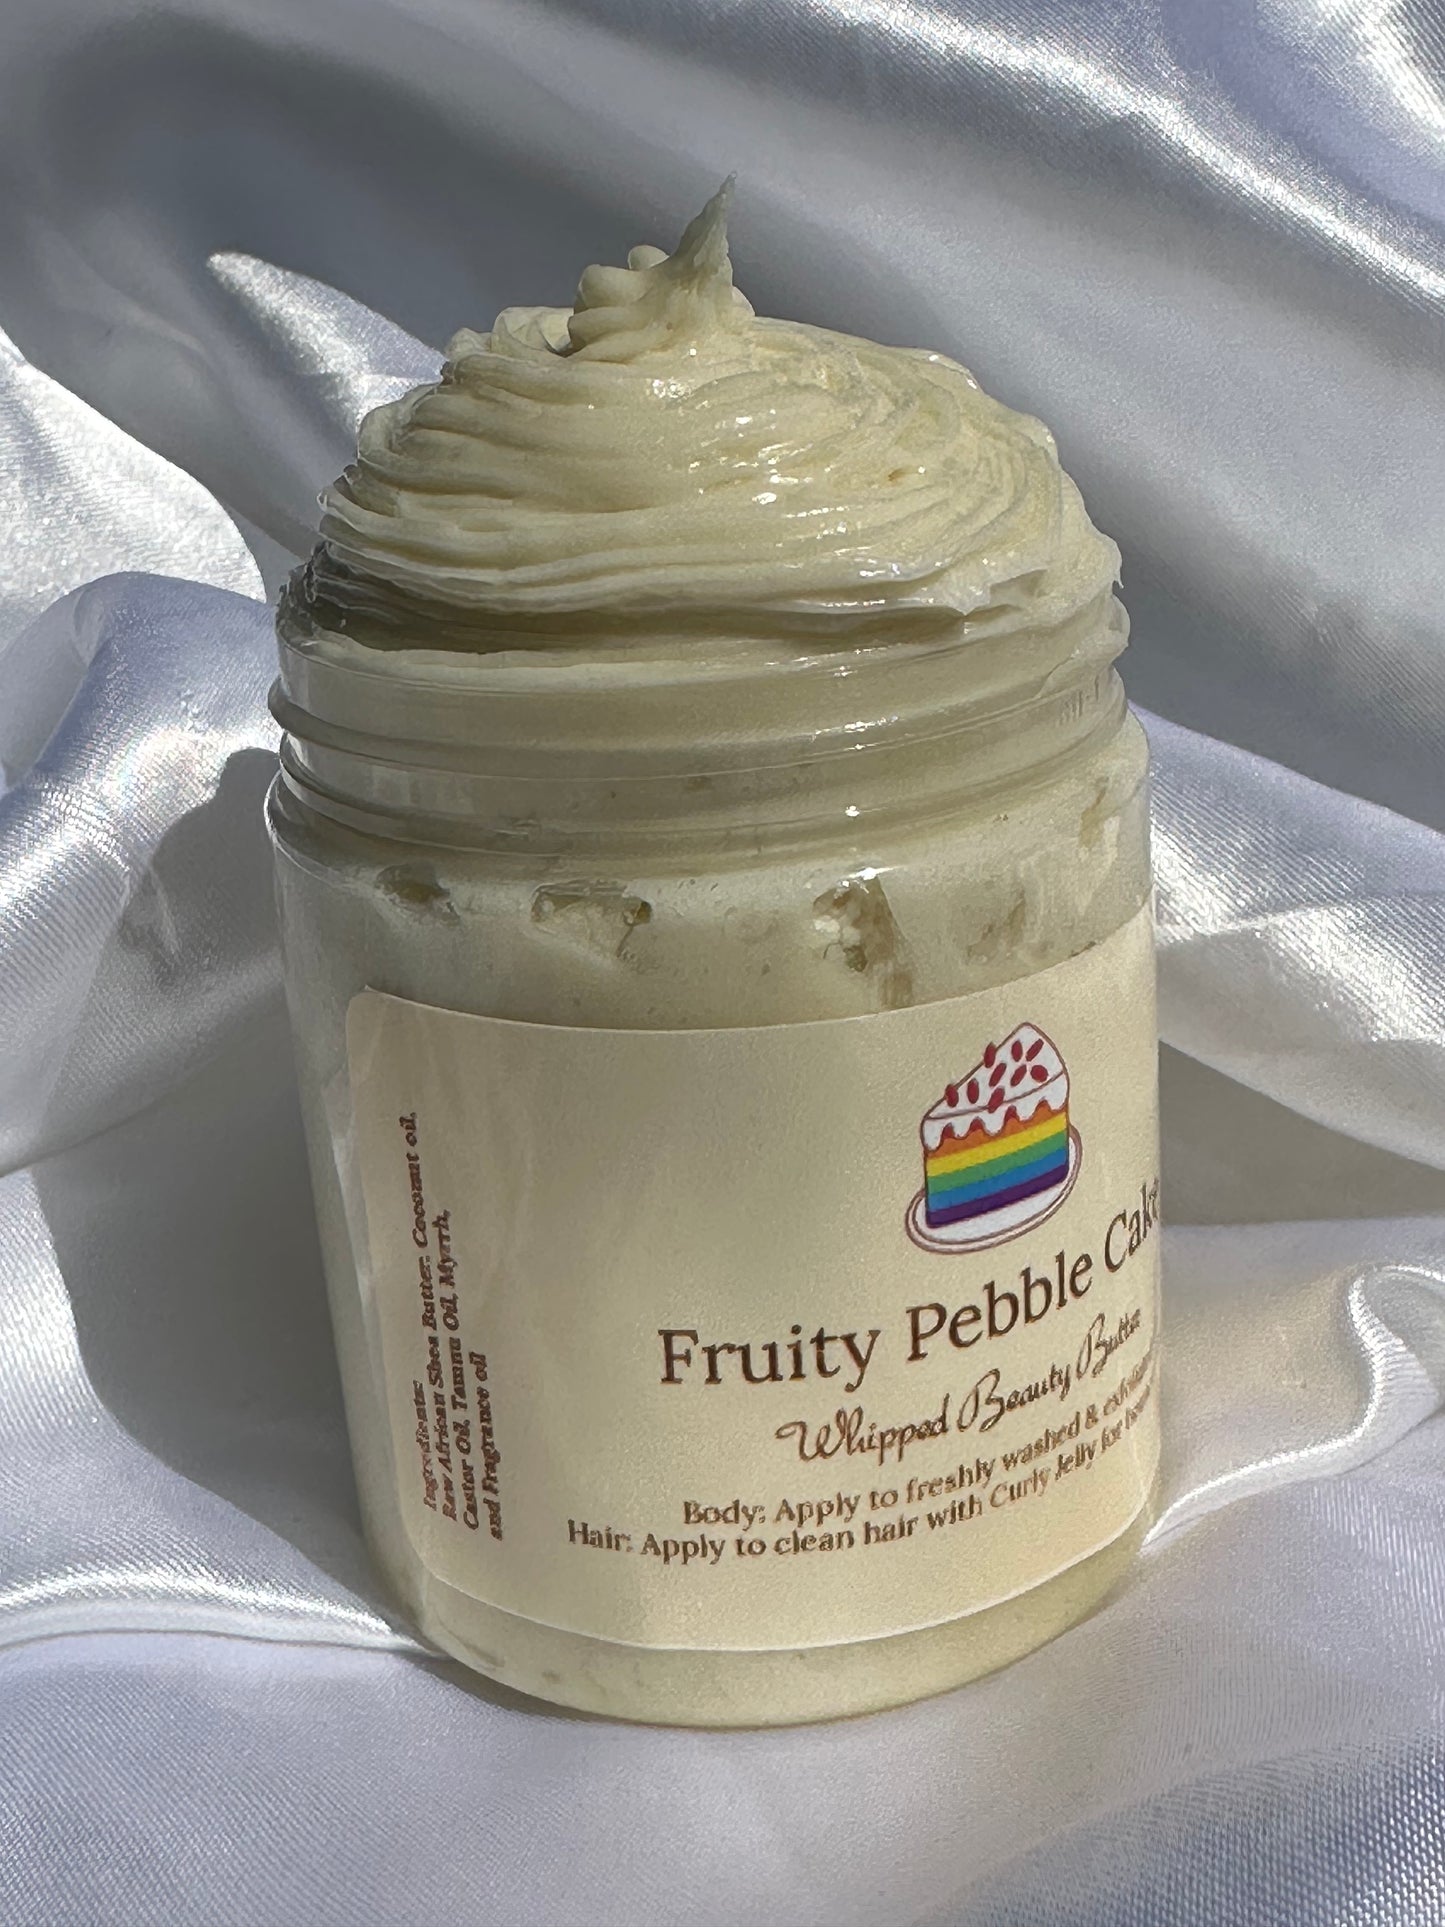 Fruity Pebble Cake Beauty Butter